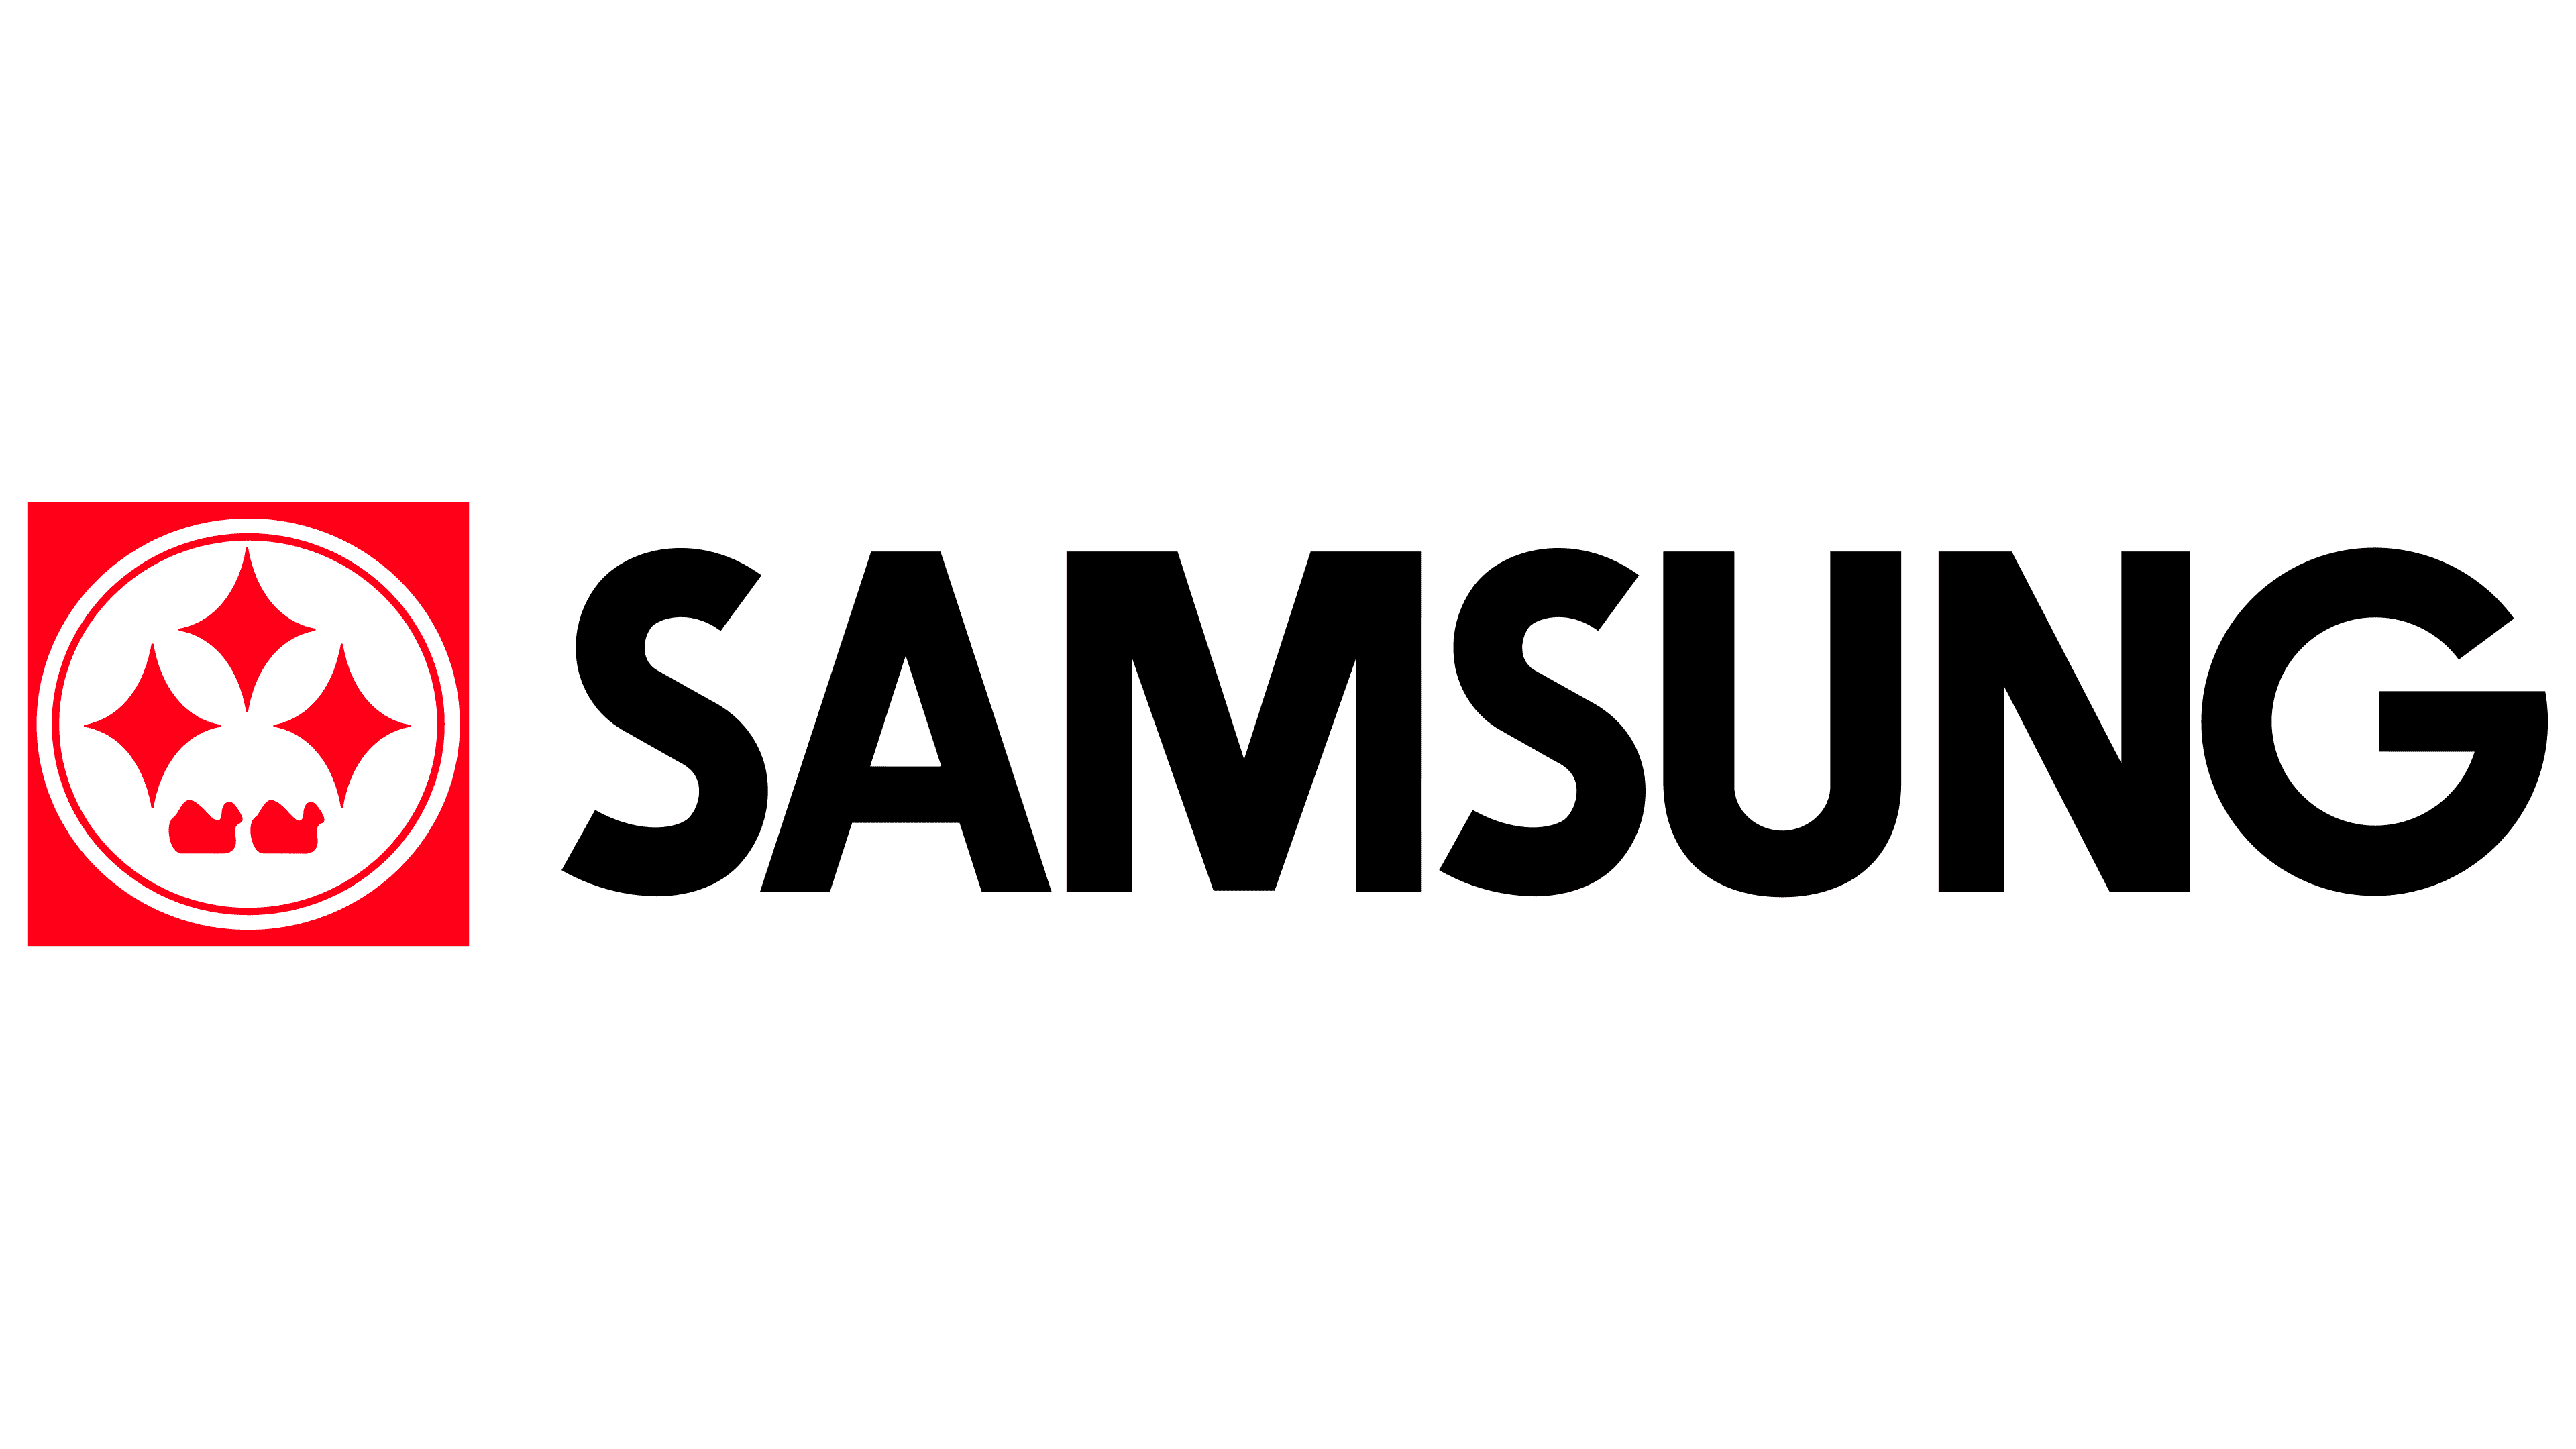 Samsung Logo PNG Transparent & SVG Vector - Freebie Supply